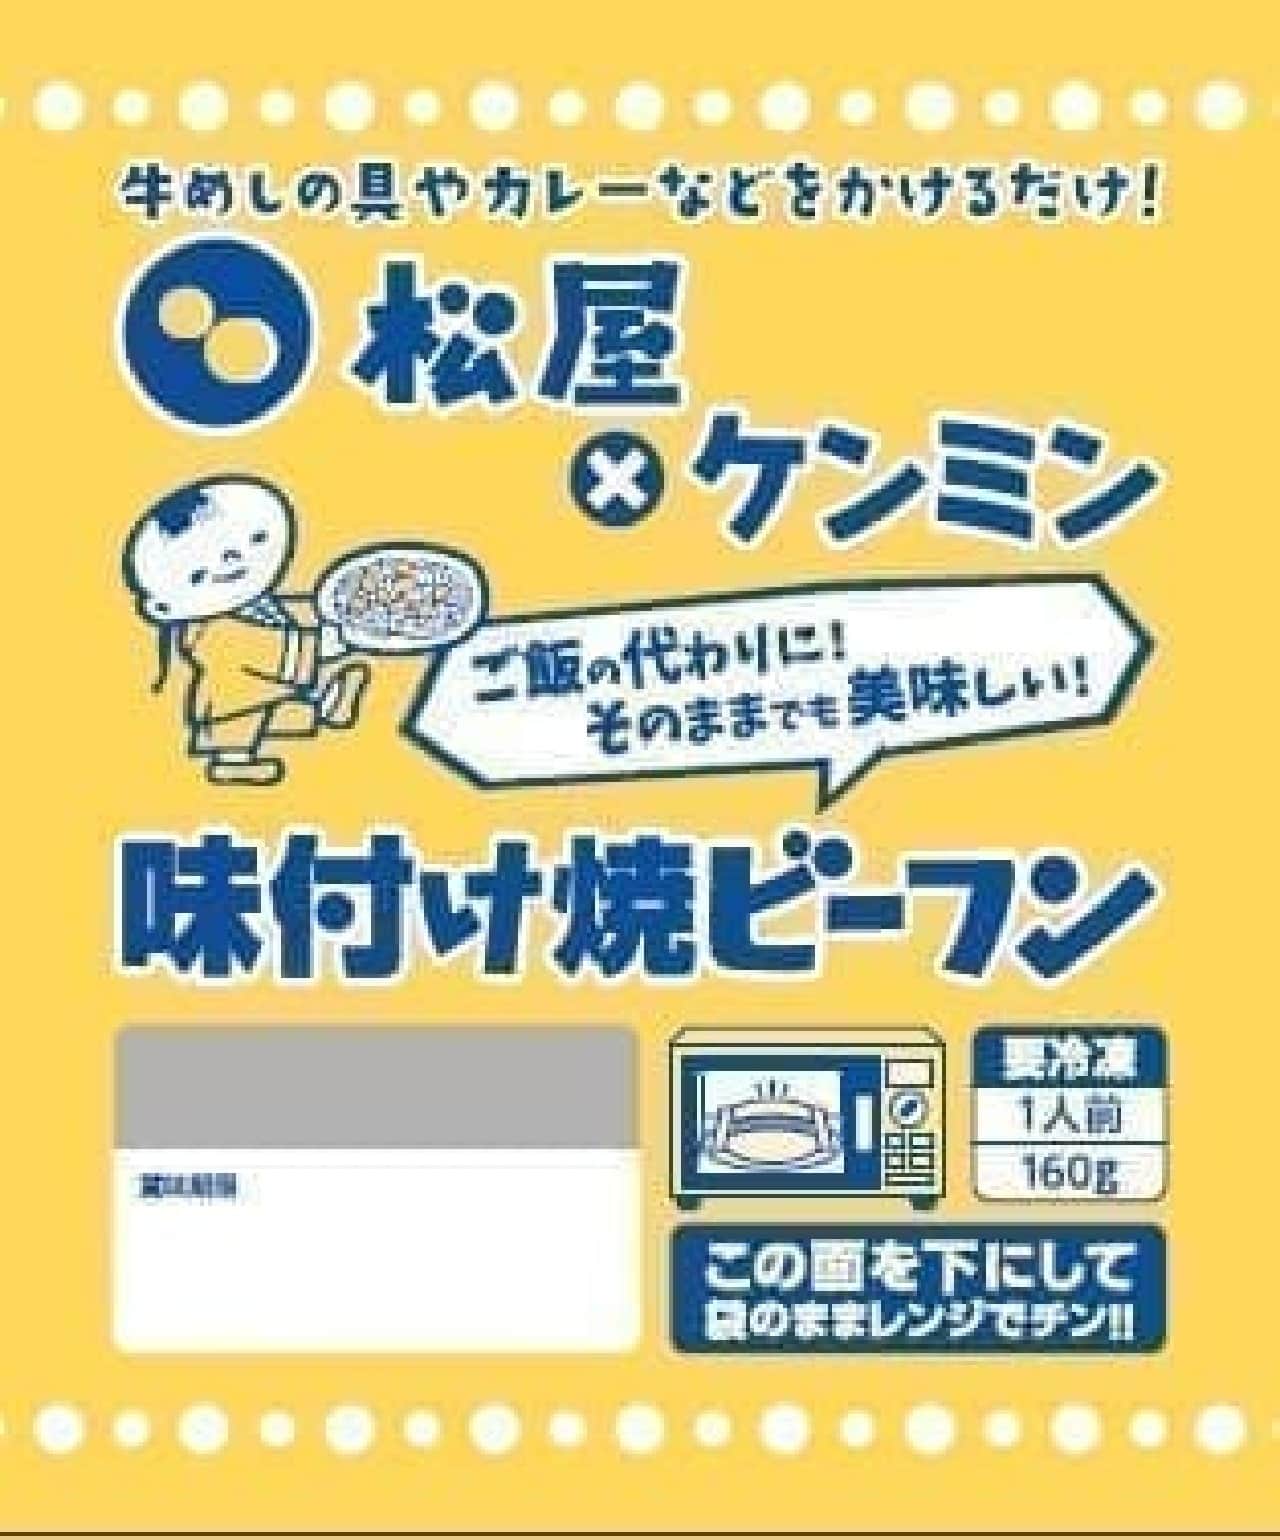 "Seasoned rice noodles" at Matsuya's official online shop